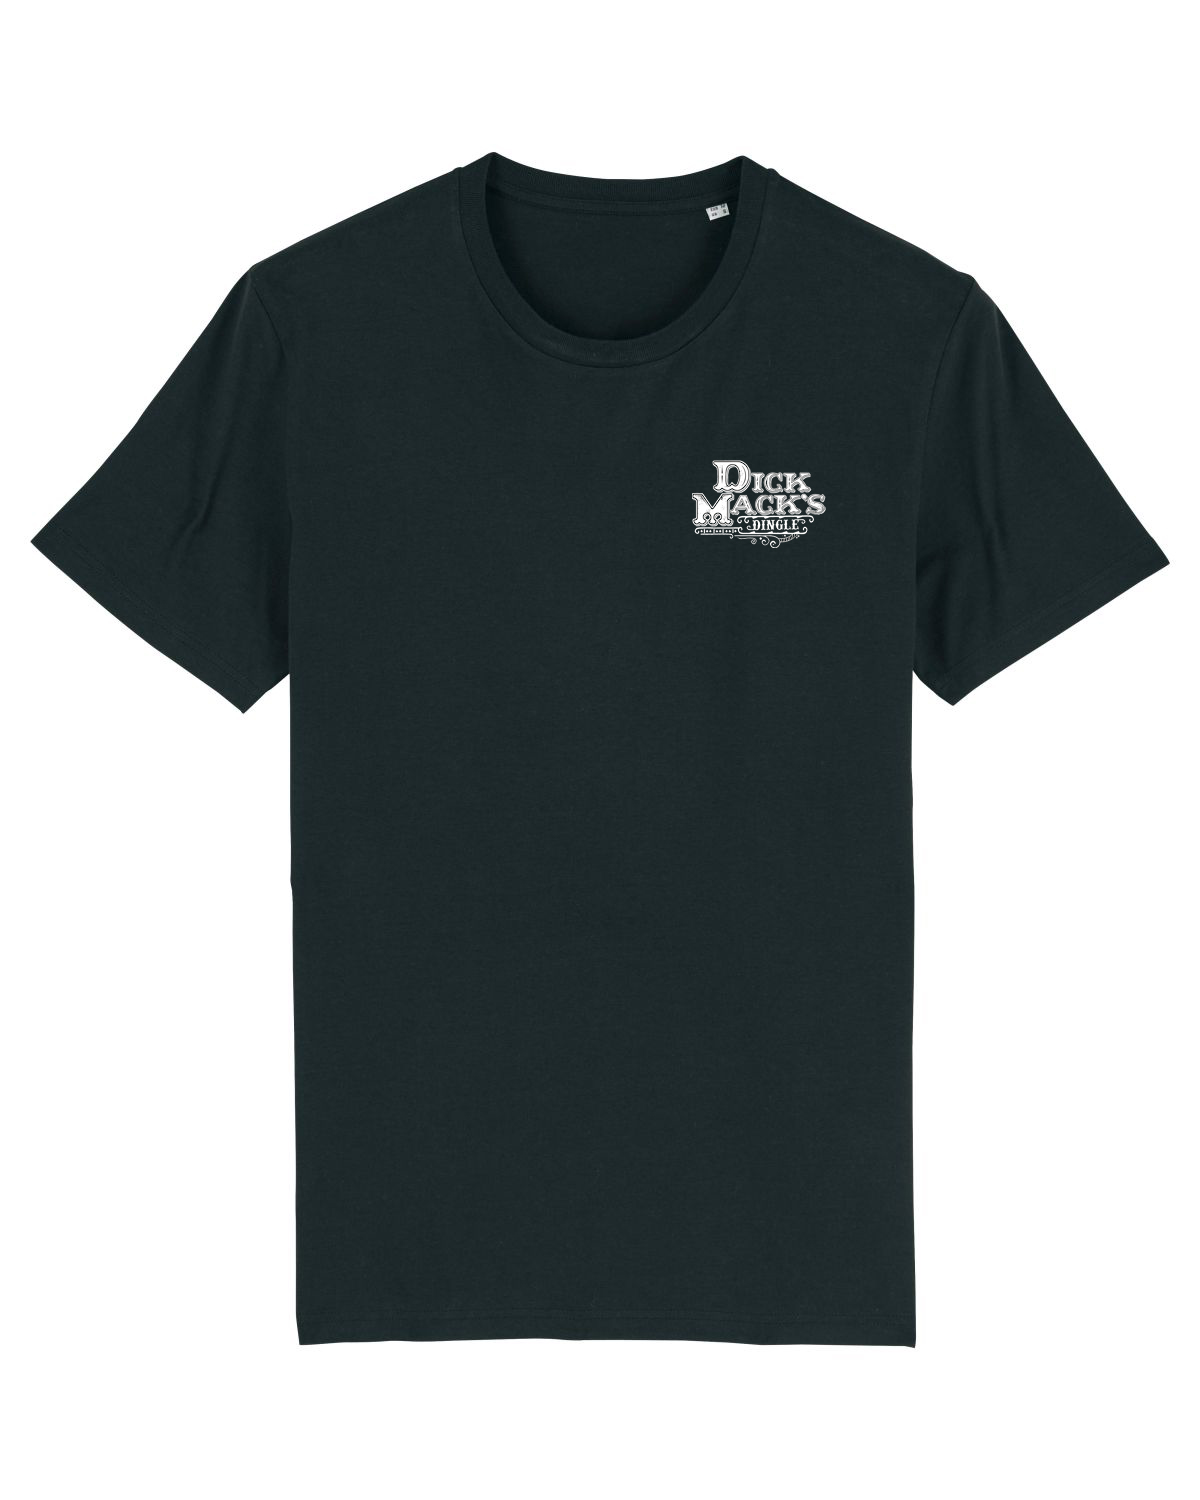 Dick Mack's Branded T-Shirt | Dick Mack's Pub & Brewery